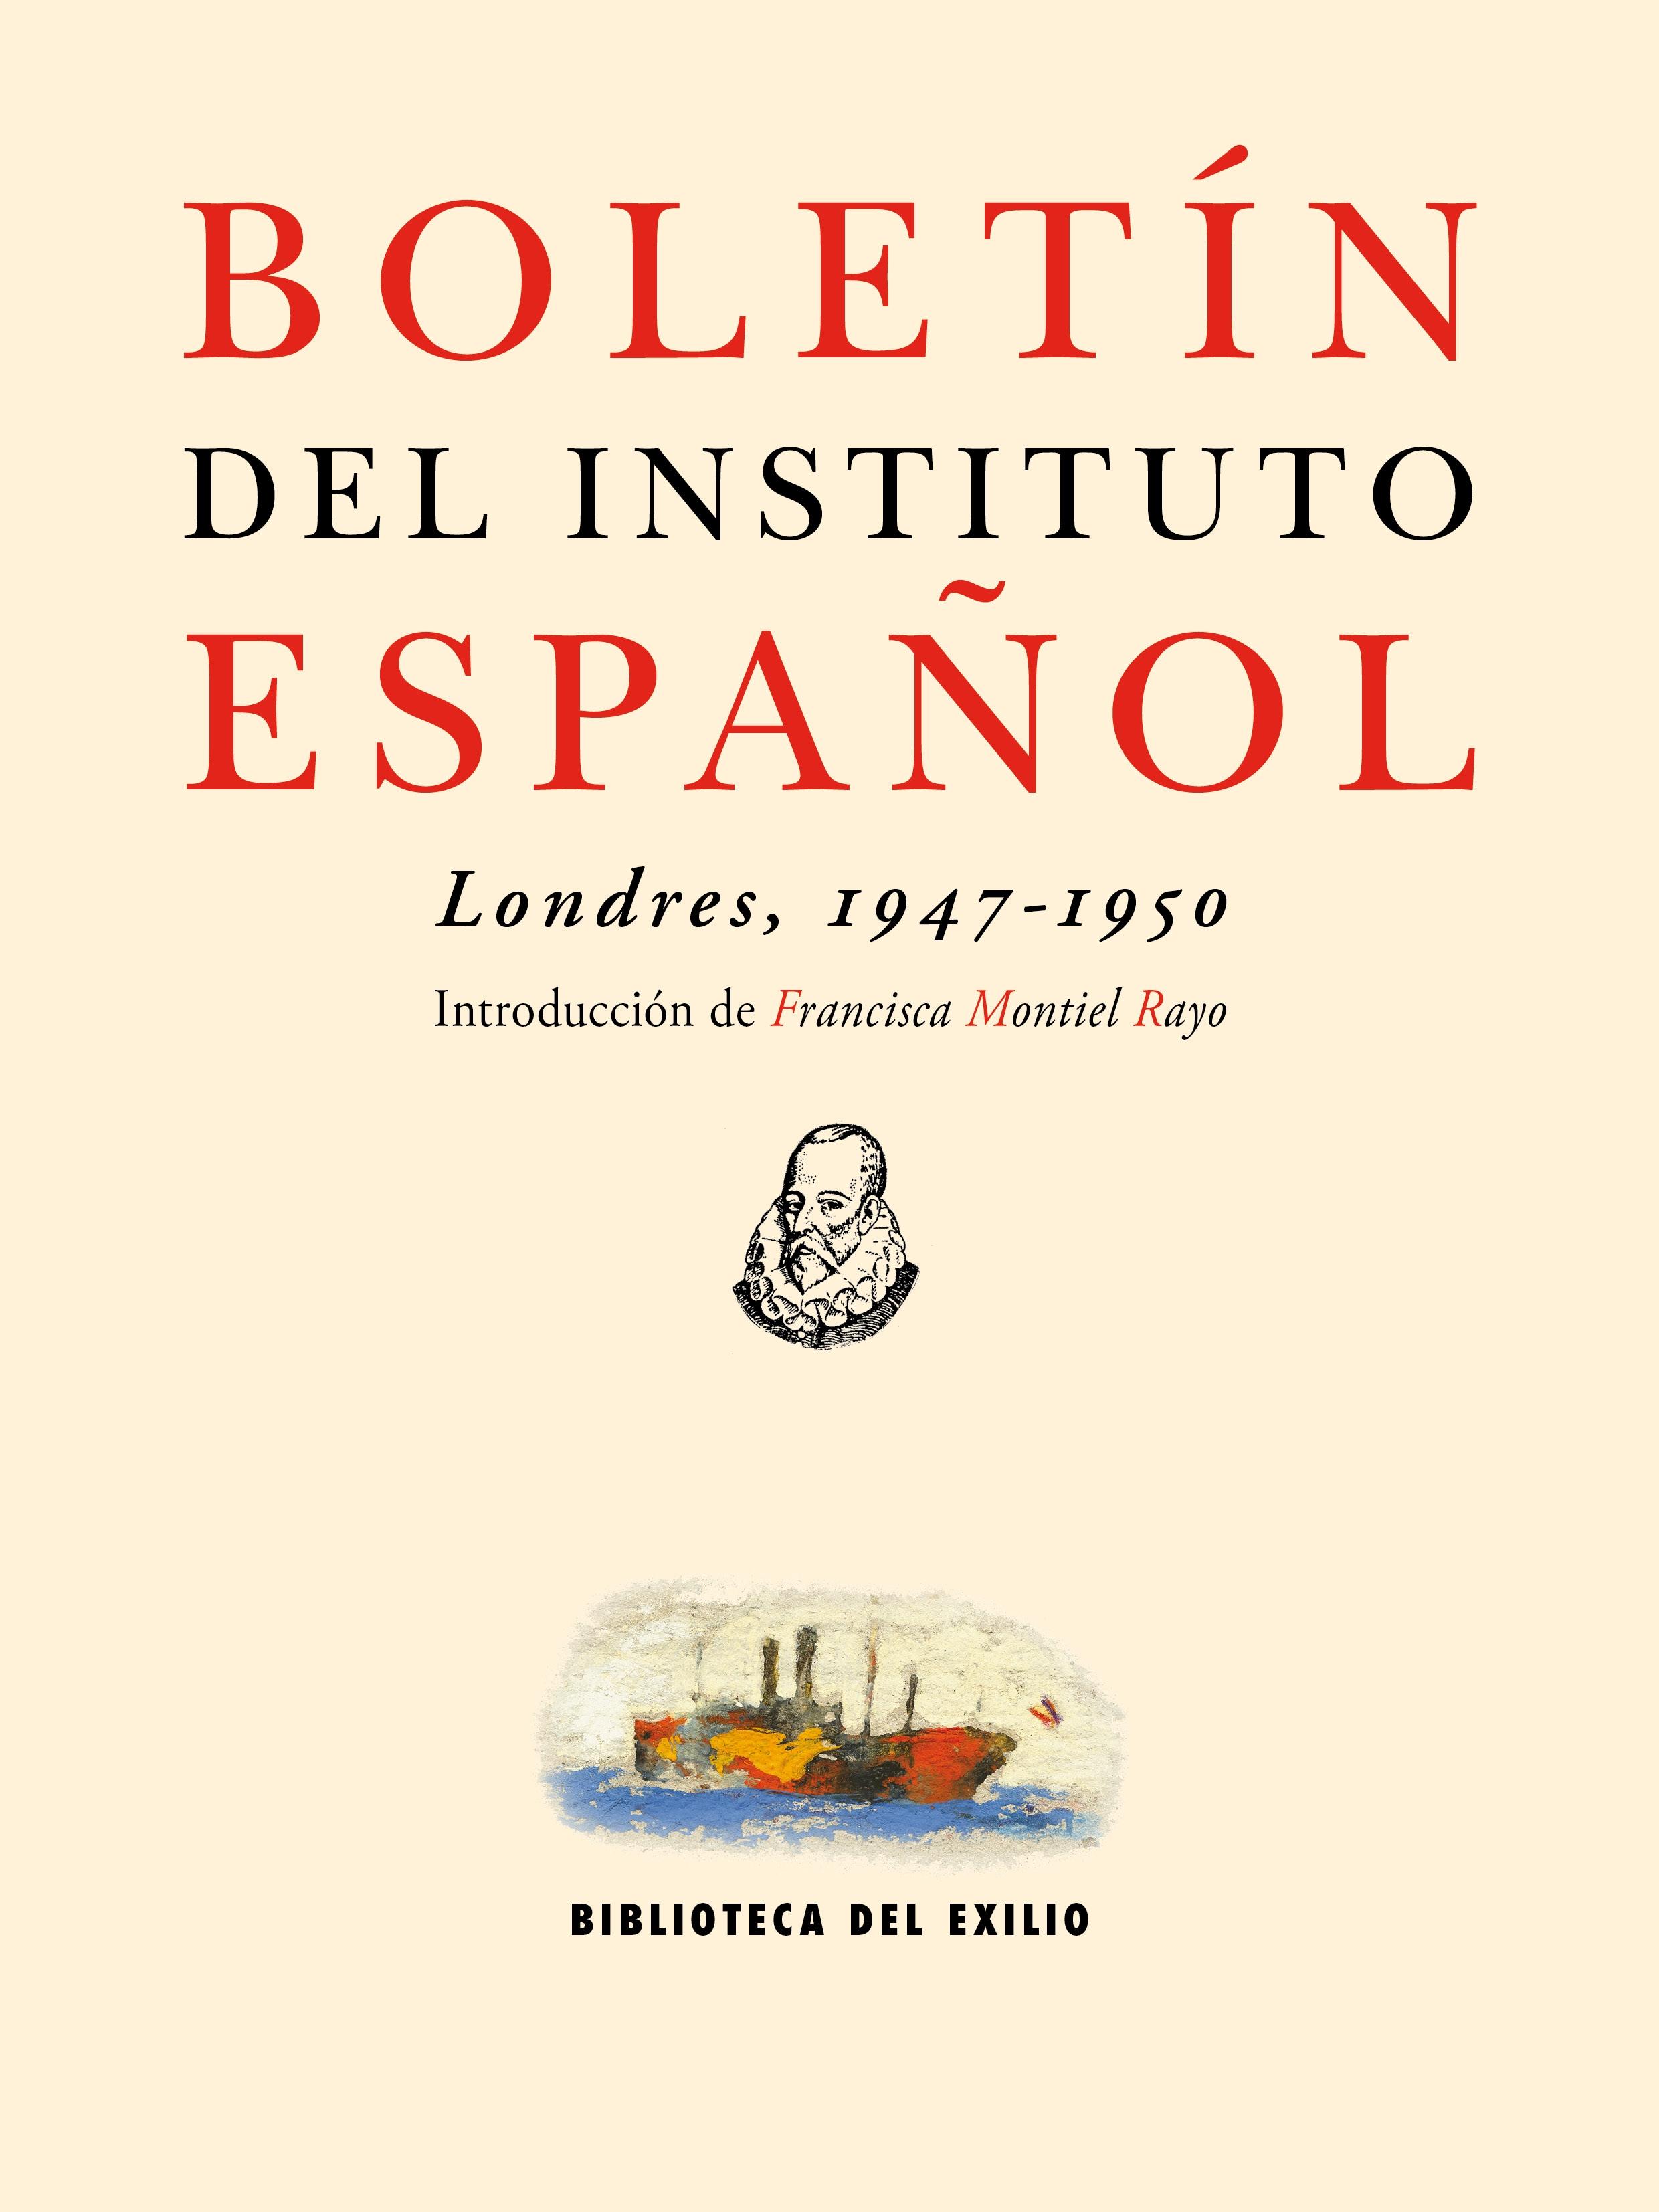 Boletín del Instituto Español "(Londres, 1947-1950)". 